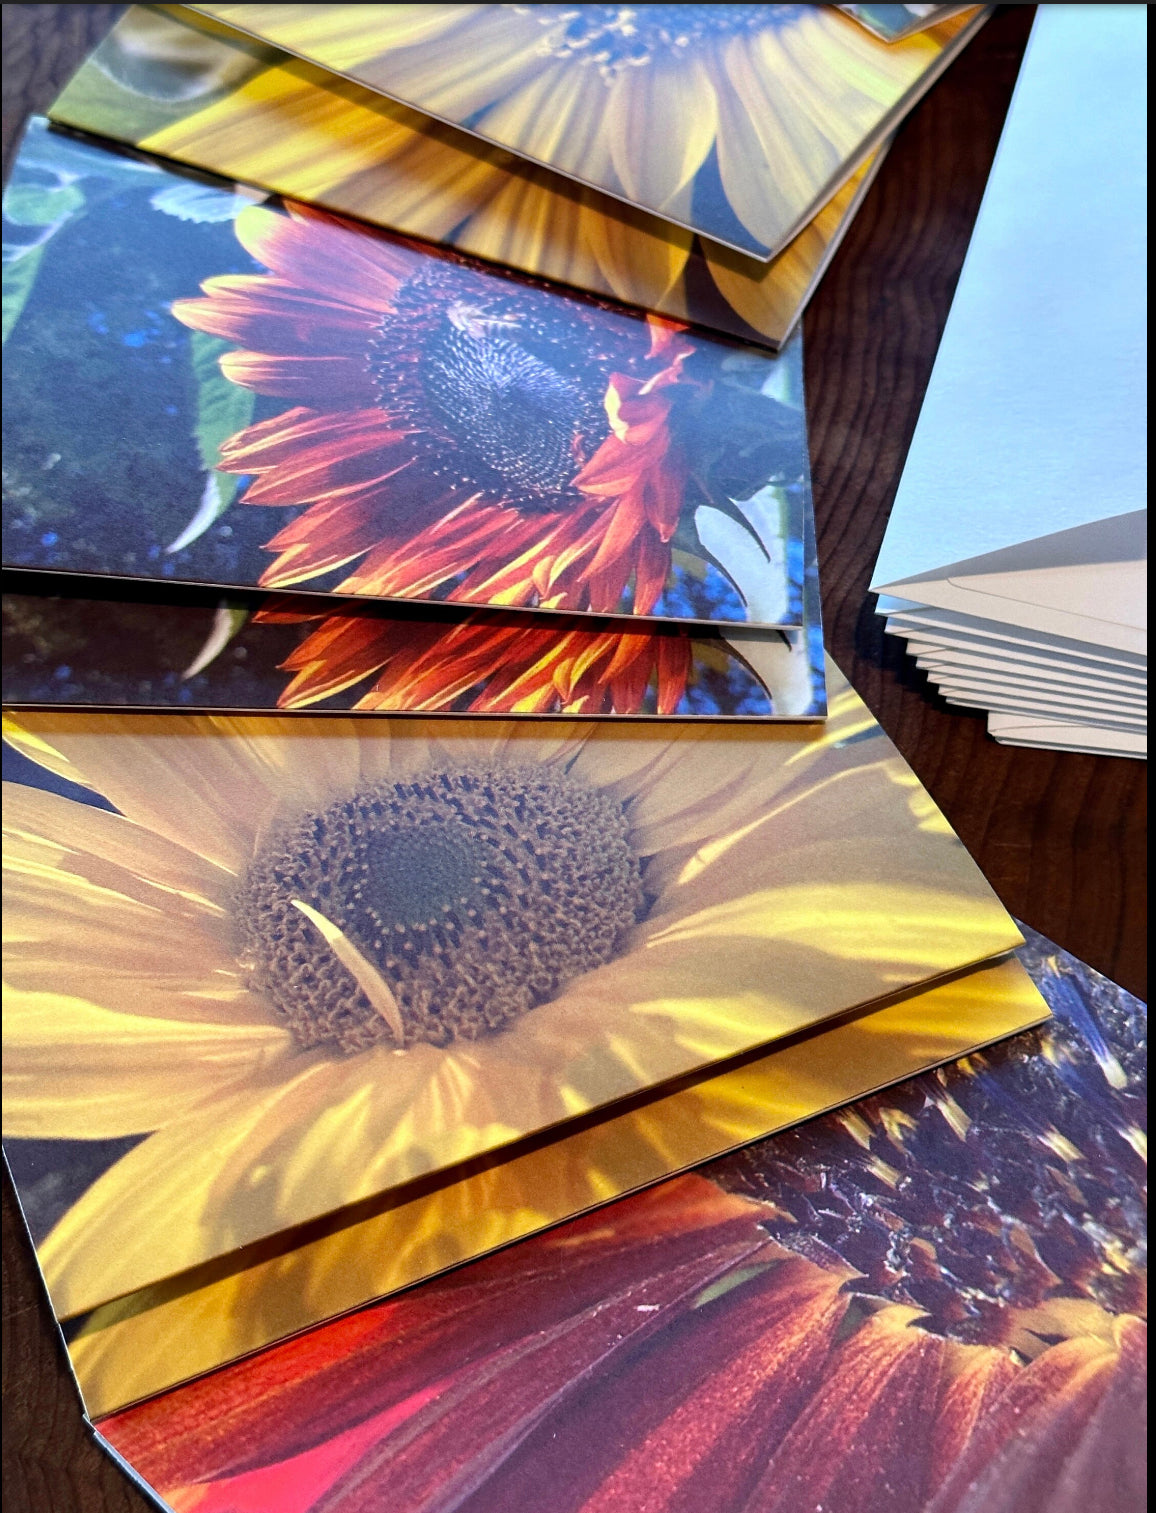 Sunflower Notecard Sets from my Sunflower Patch (Set B)